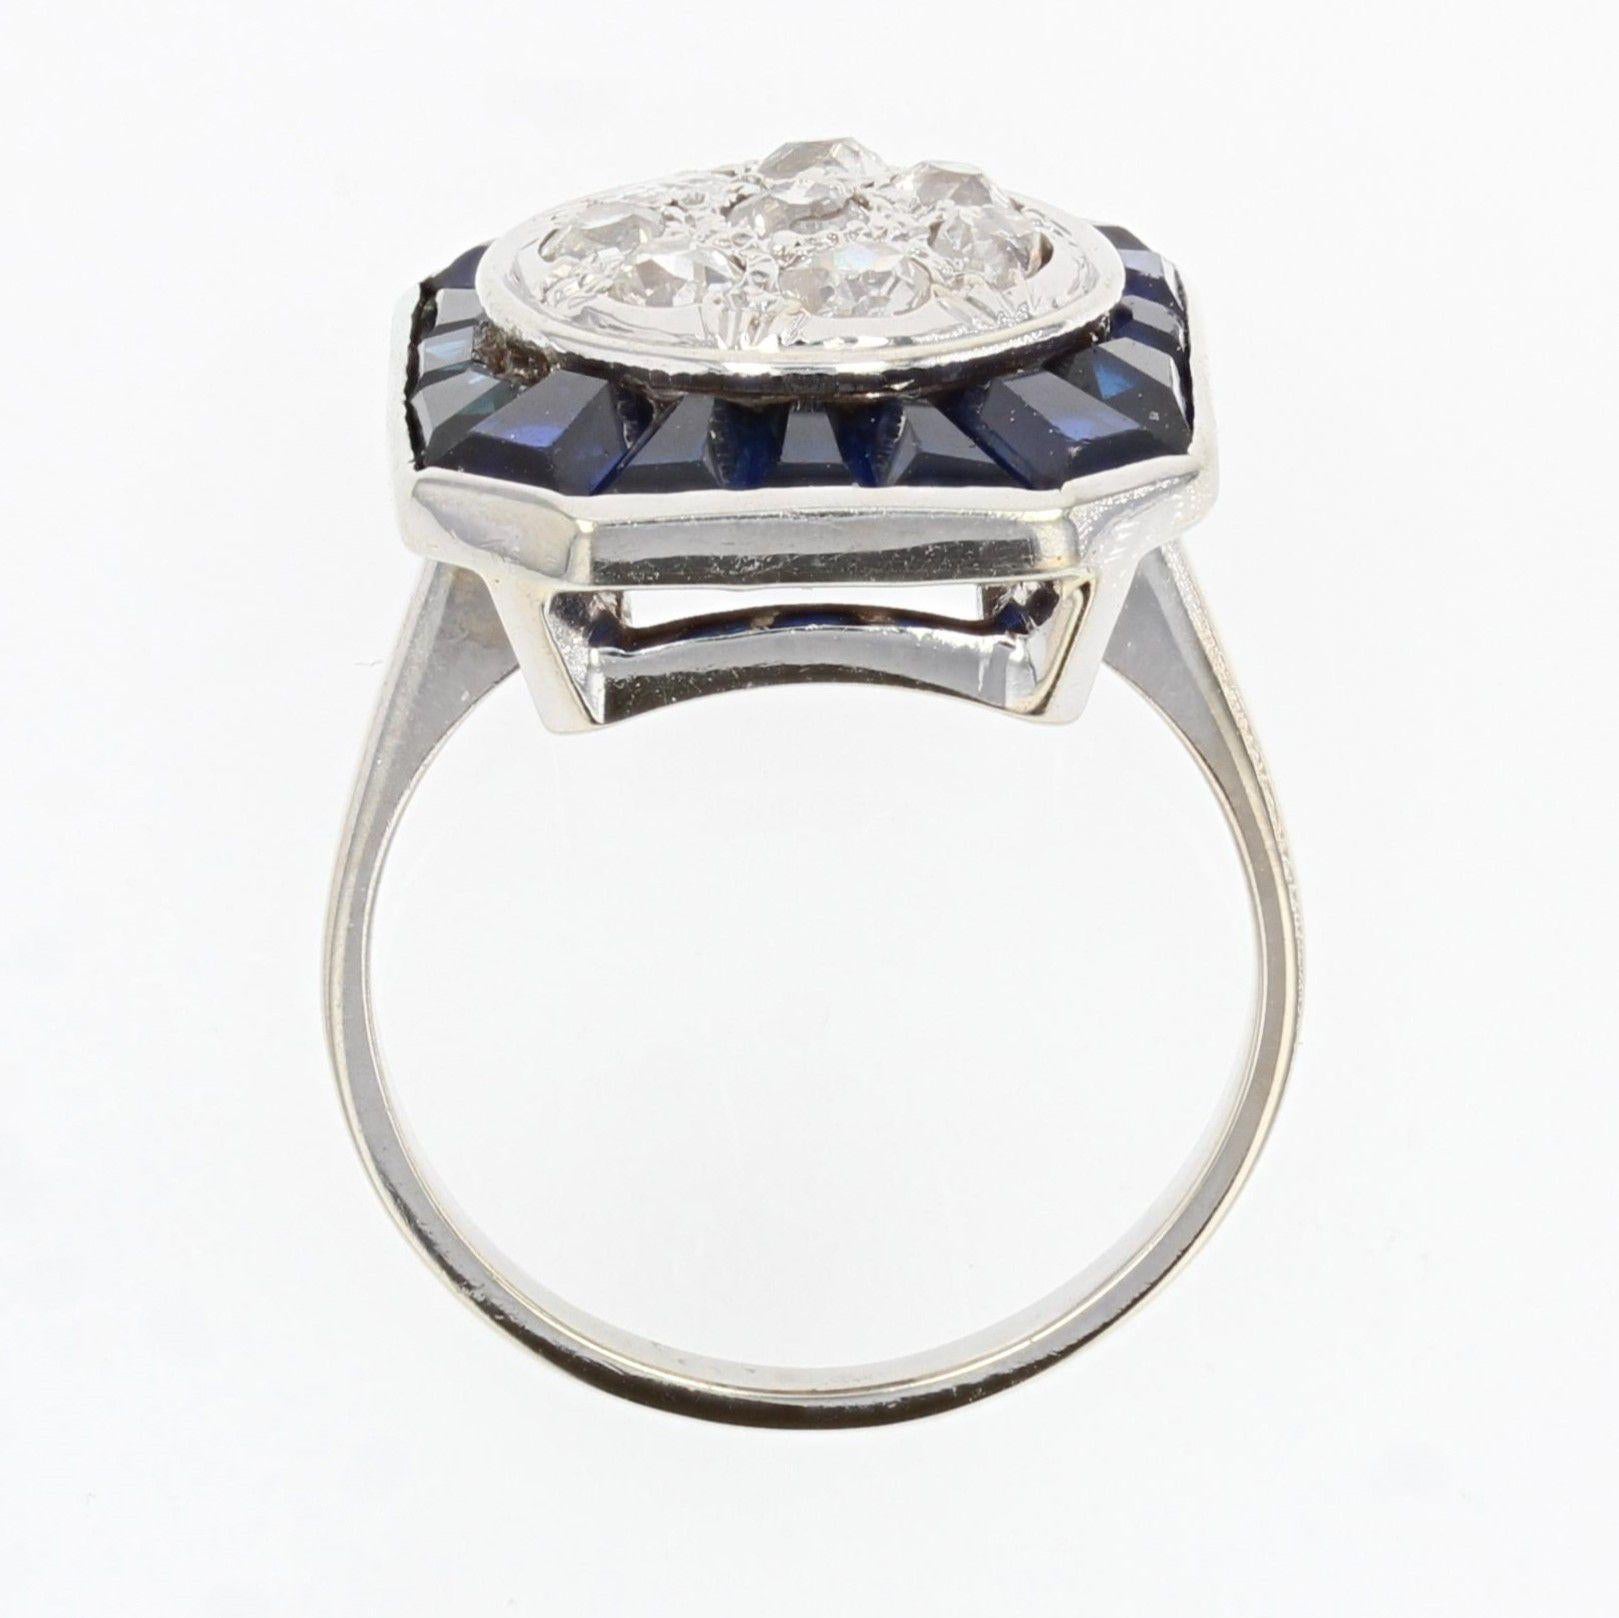 French 1930s Art Deco Diamonds Paving 18 Karat White Gold Ring 6